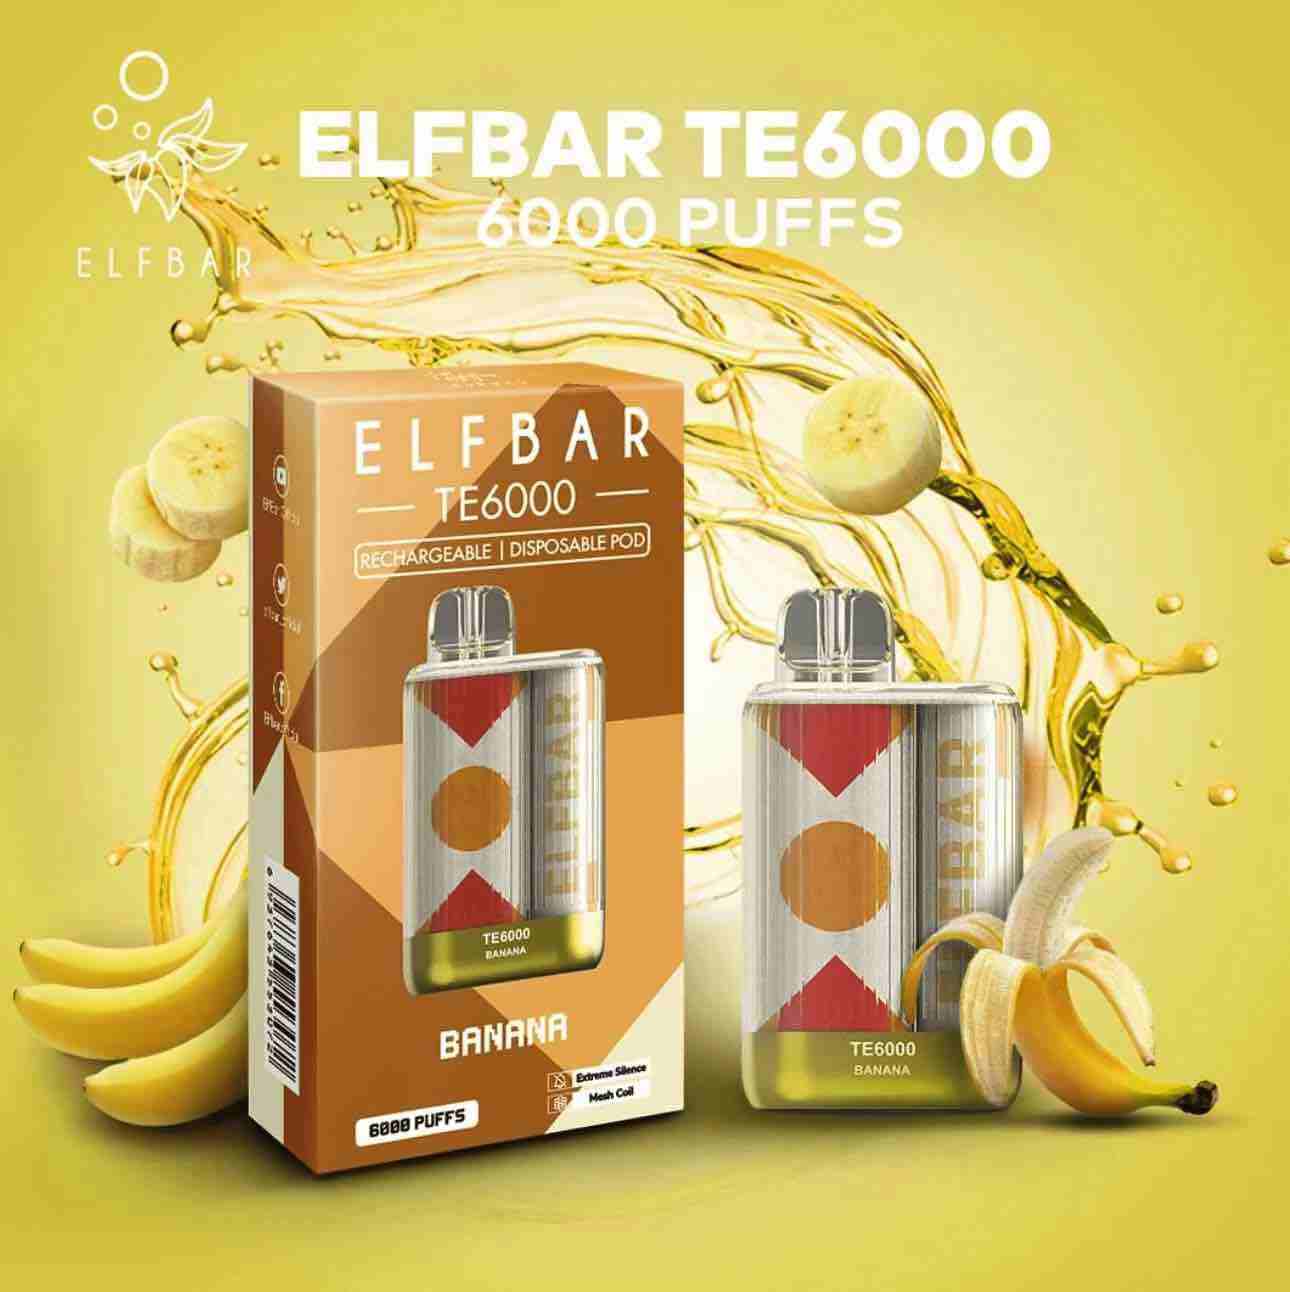 Banana - ELF BAR TE6000